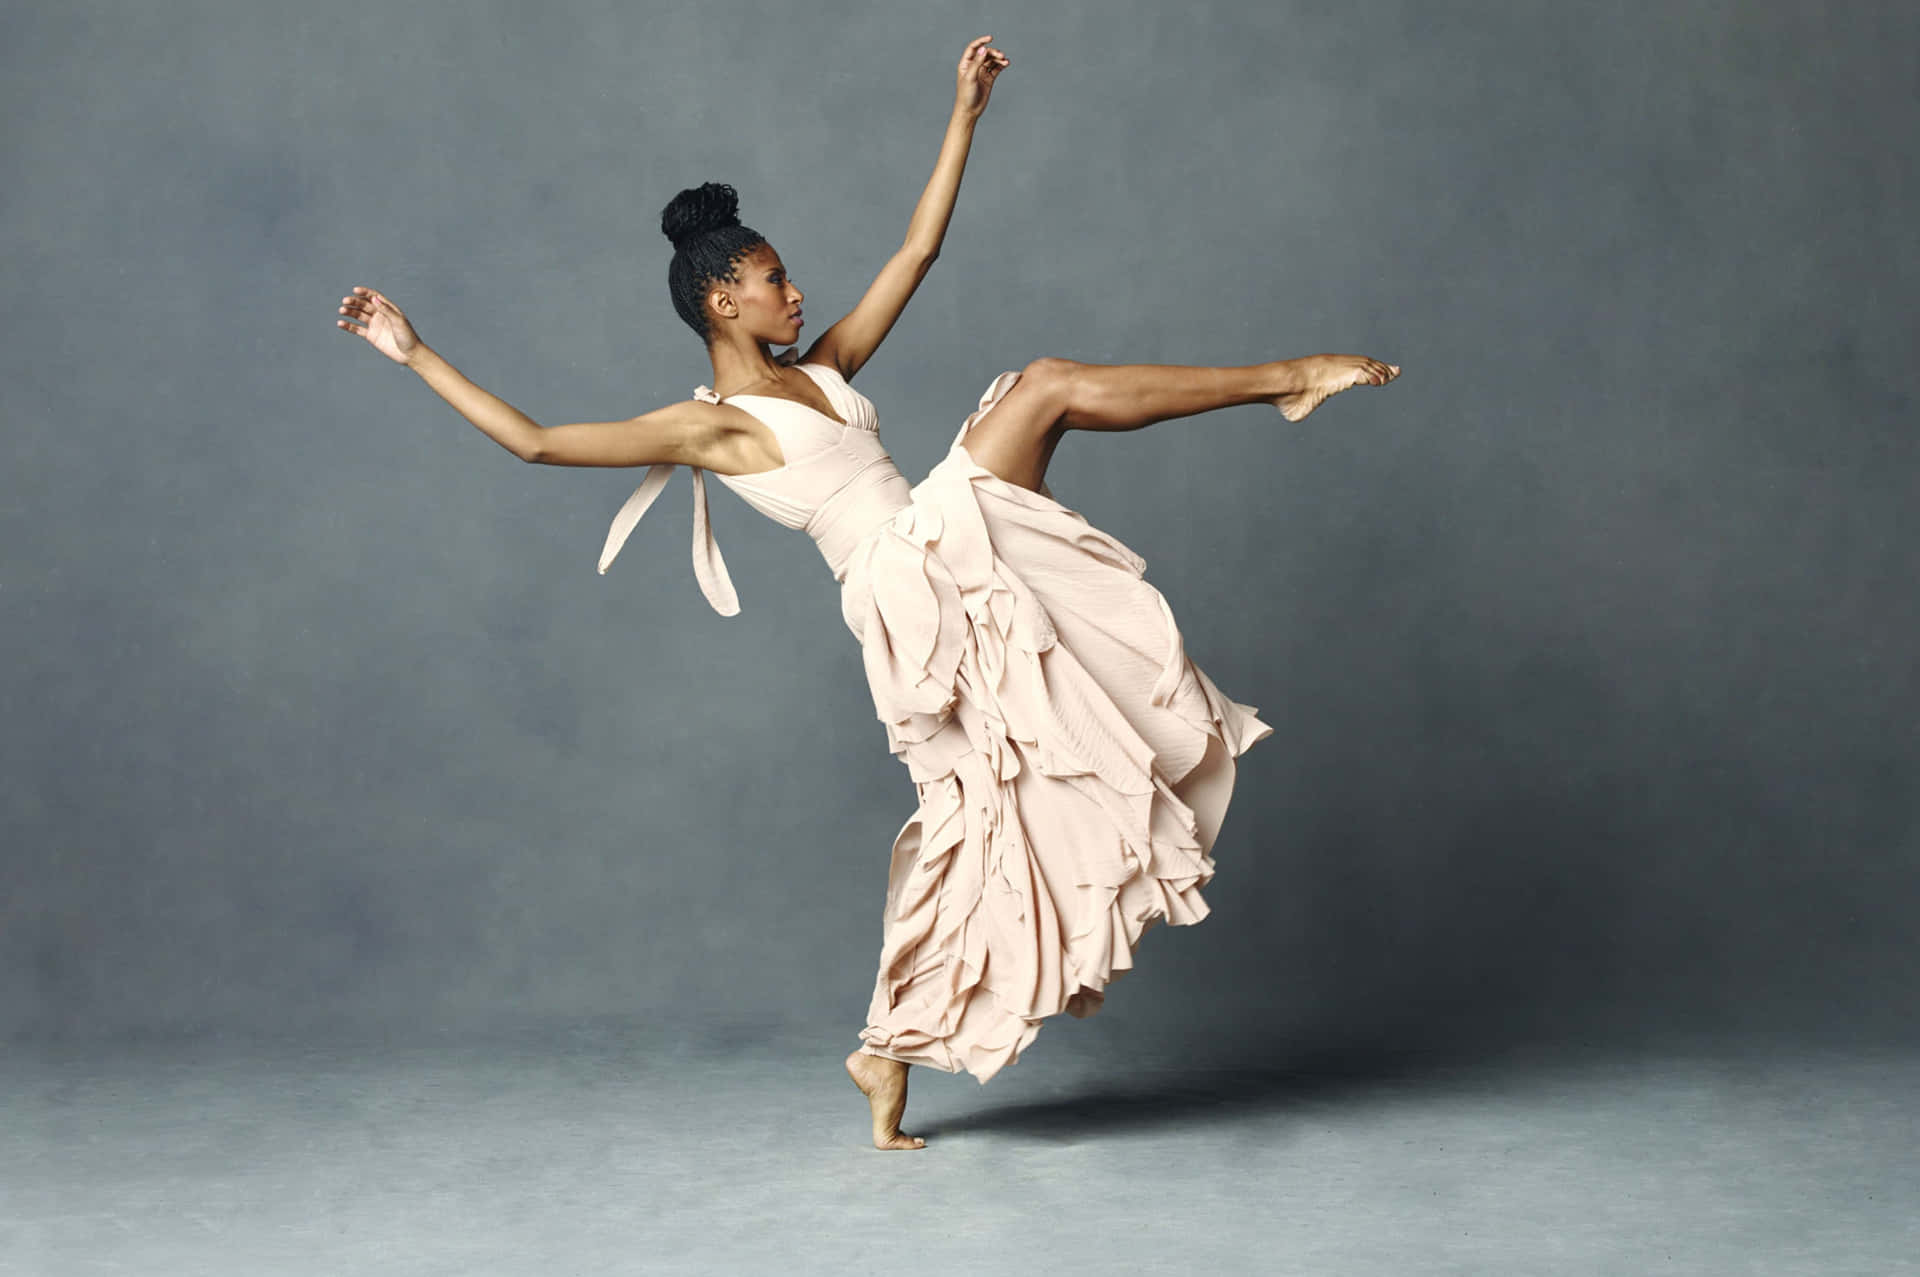 Black Woman Dancer Pose Picture